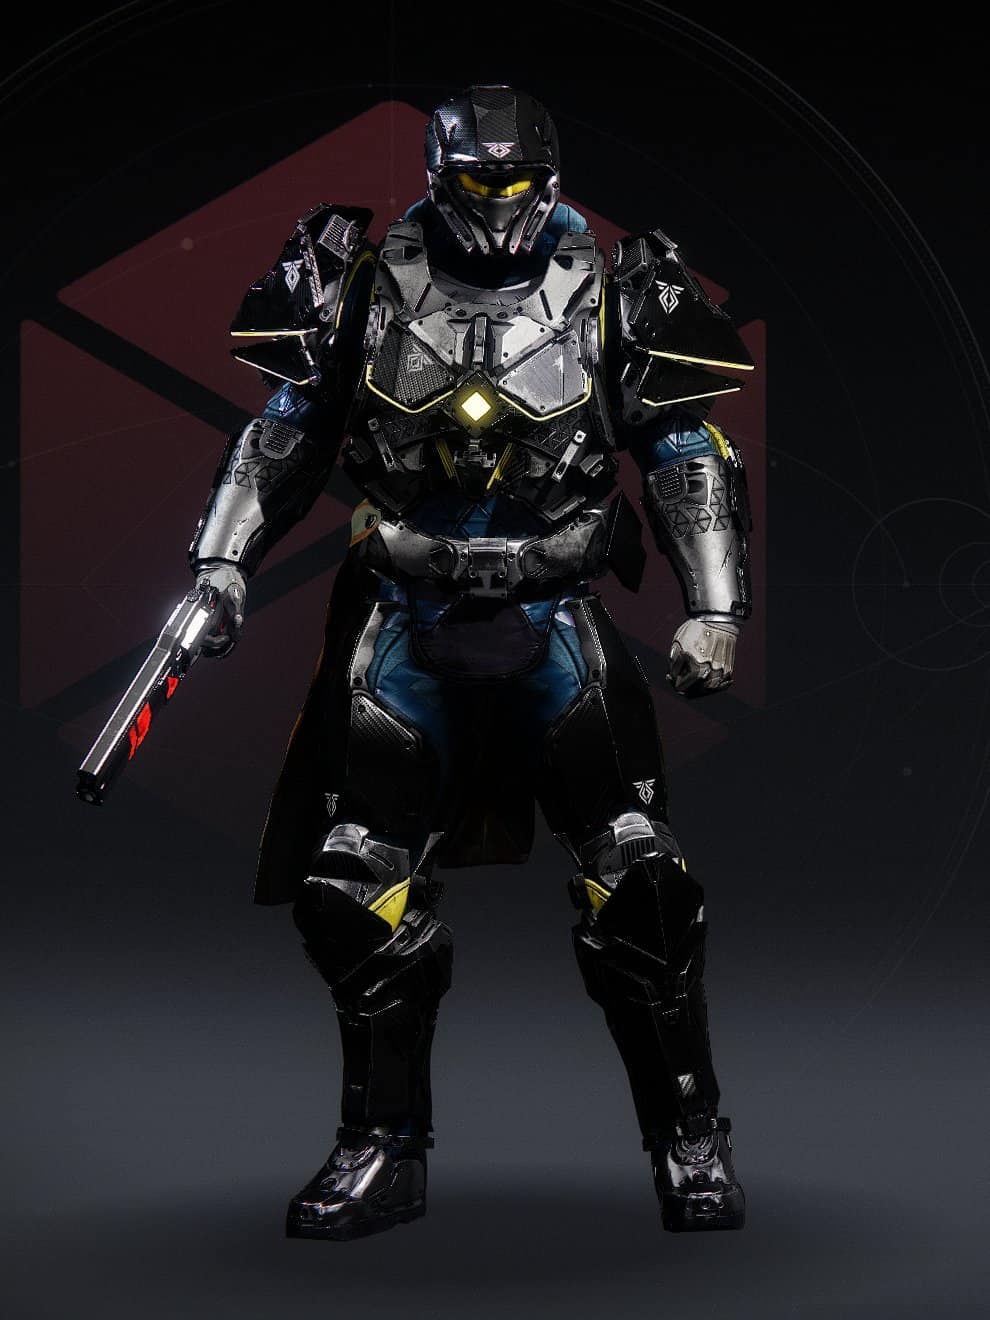 Warmind's Avatar armor Titan